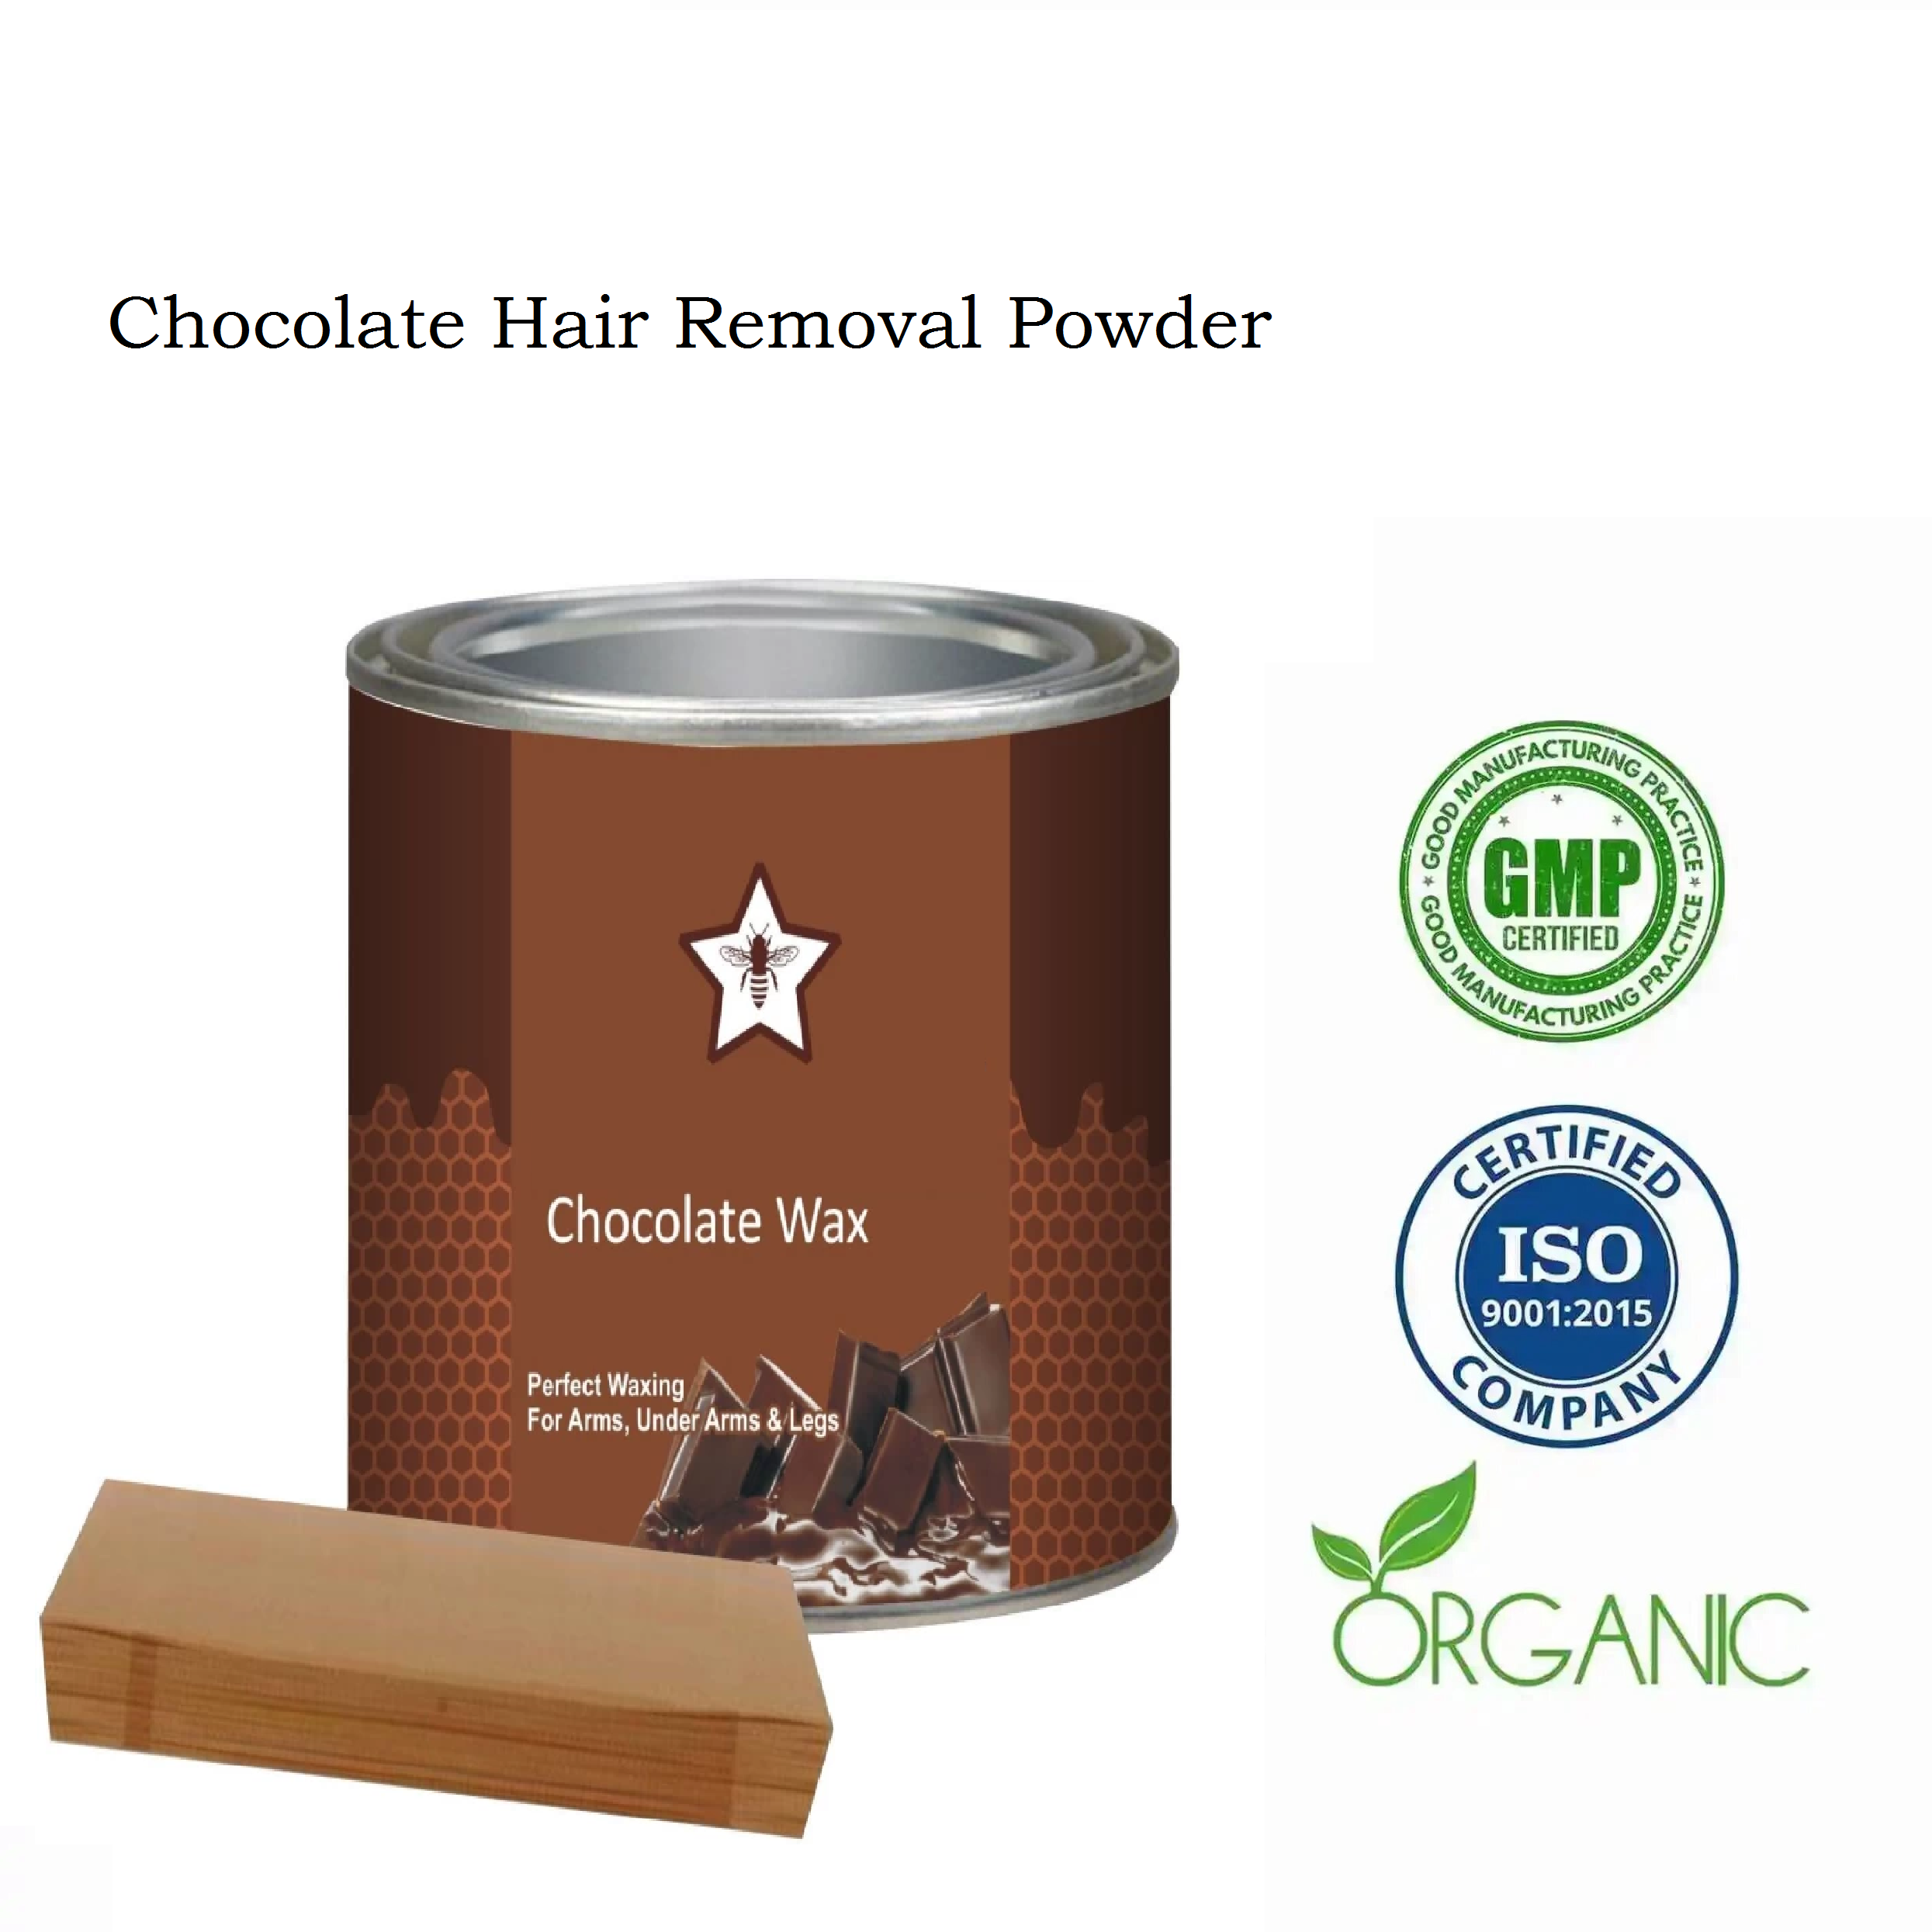 Chocolate Hair Removal Powder